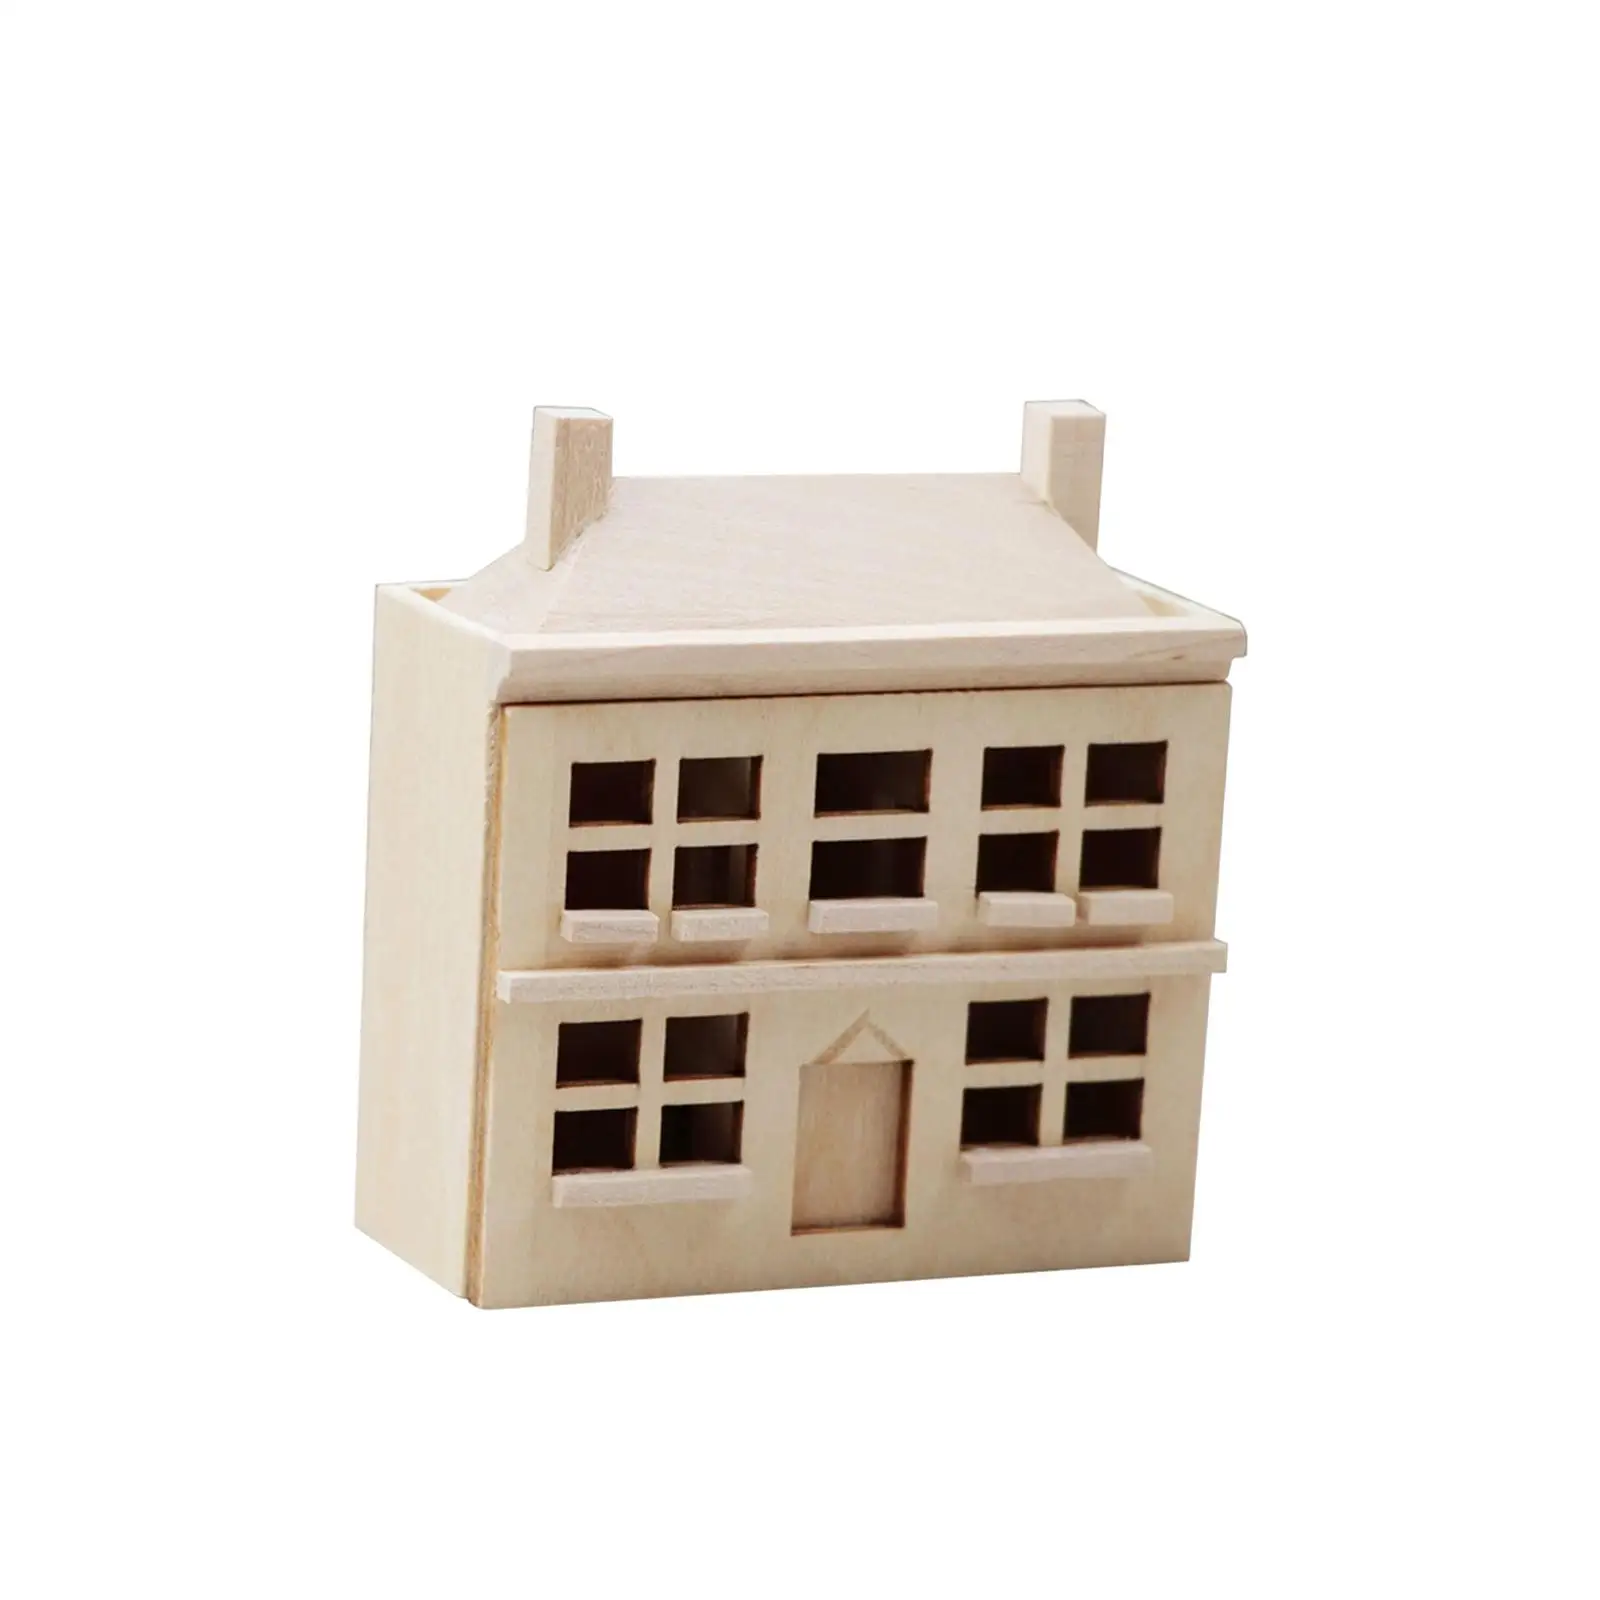 1:12 Dollhouse Villa House Handmade Model Miniature for Ornament